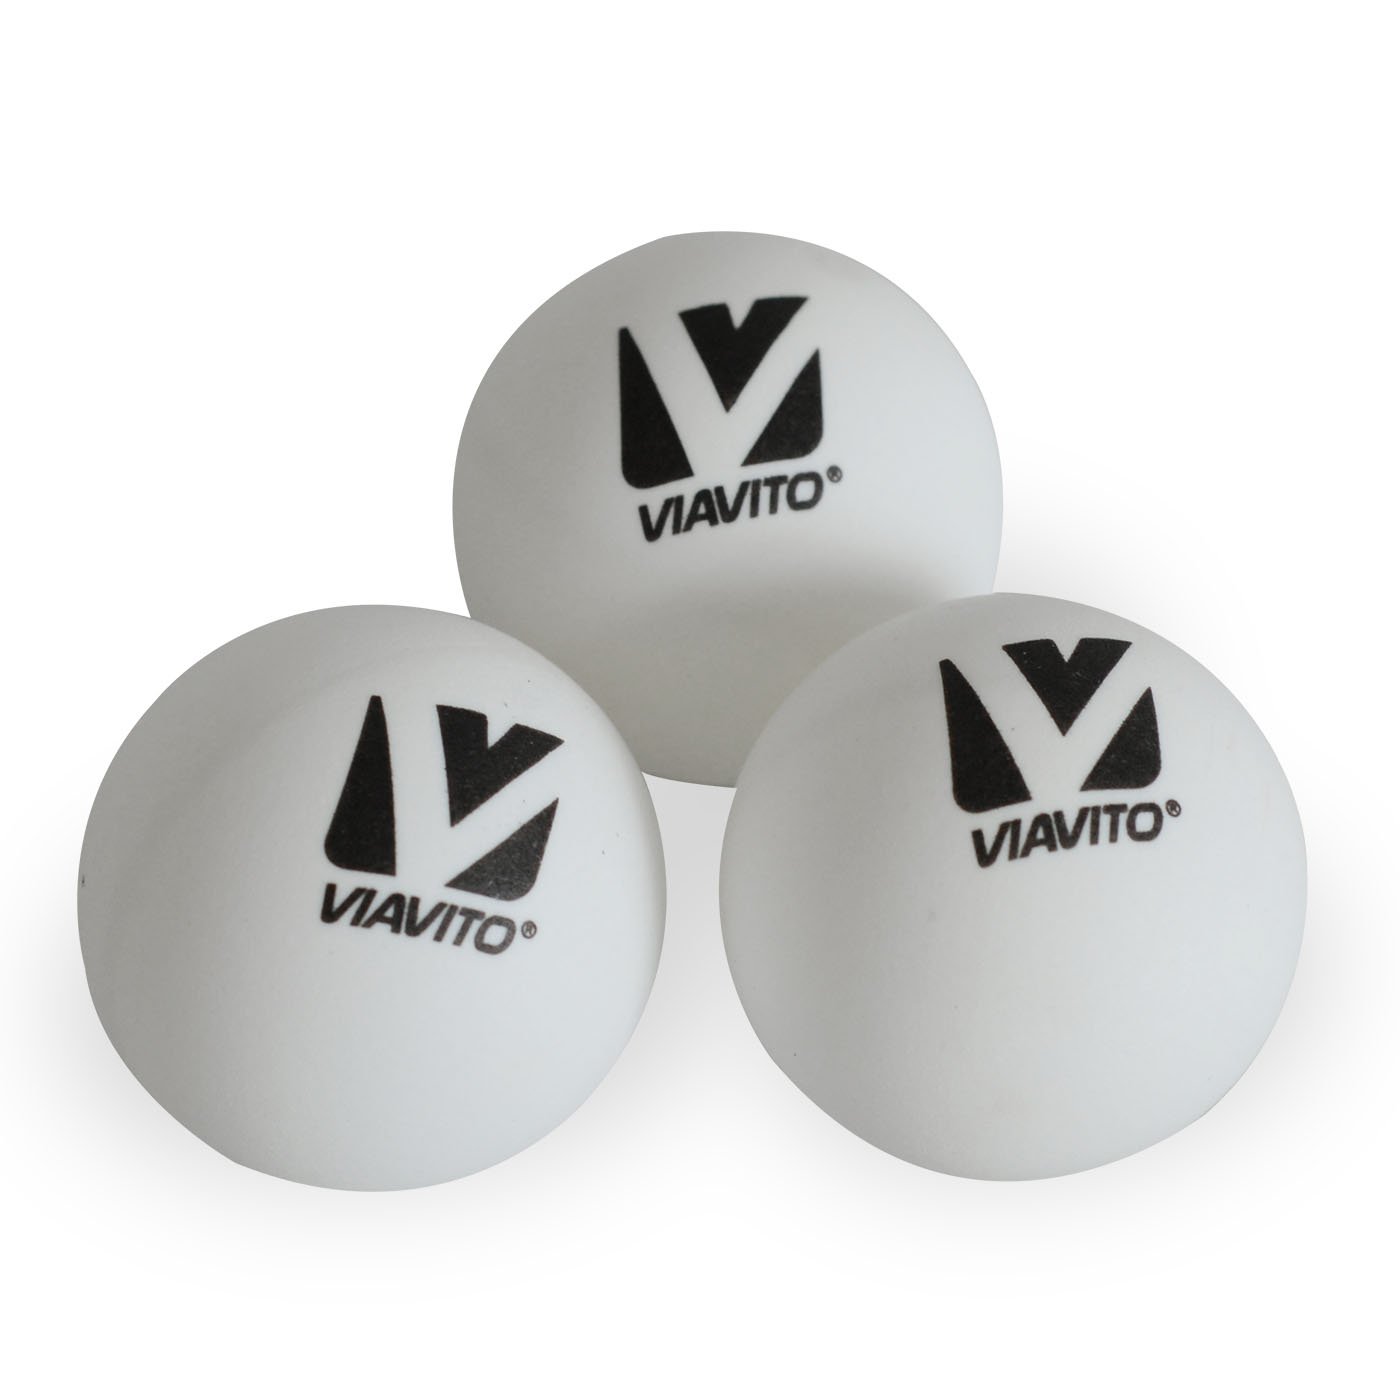 |Viavito Enduo 2 Player Table Tennis Set - Balls|